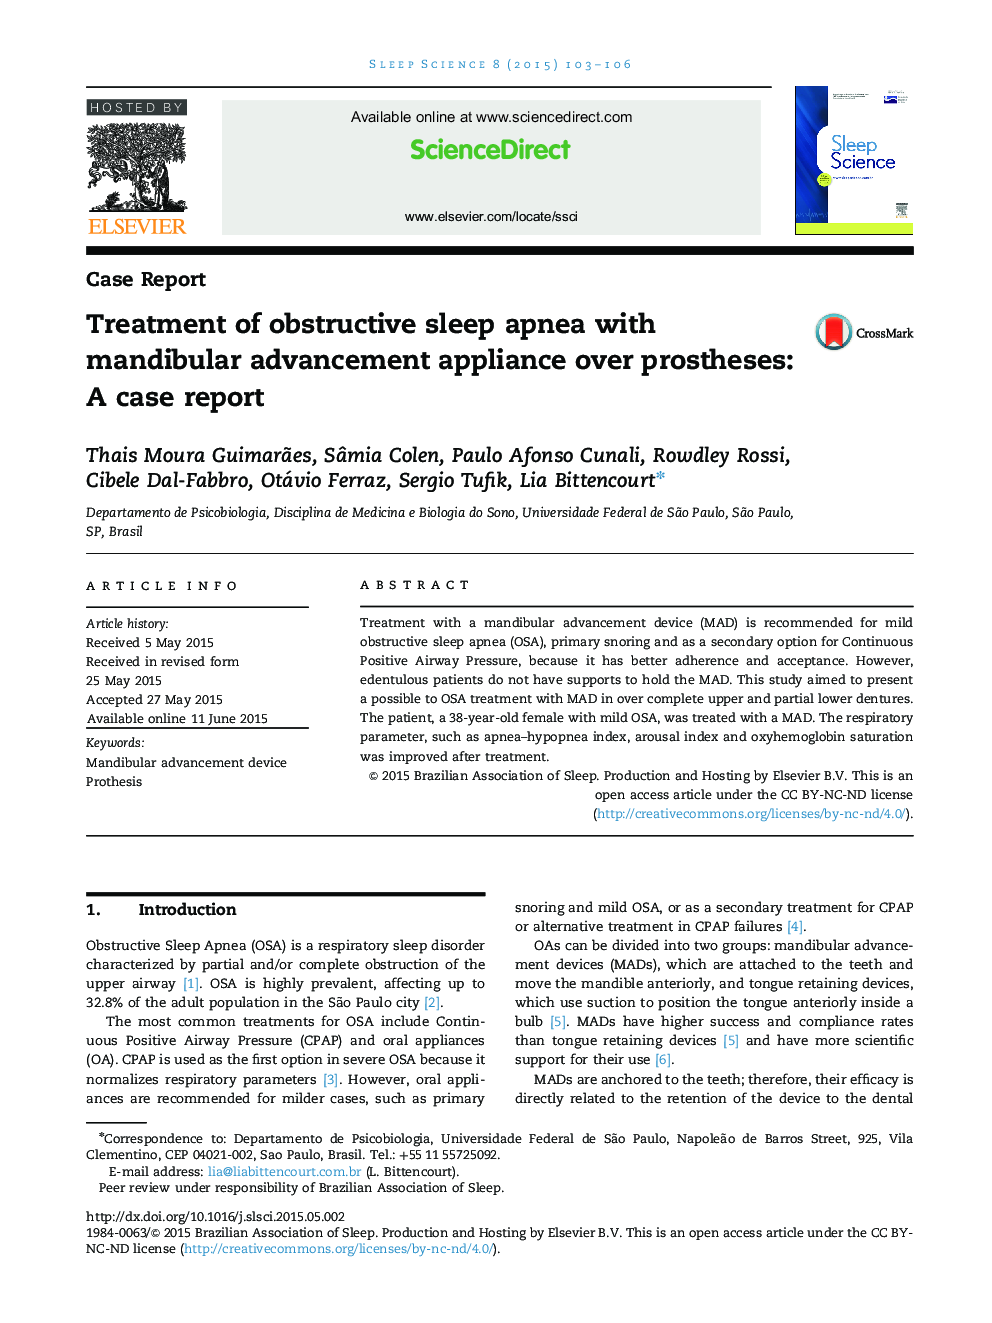 Treatment of obstructive sleep apnea with mandibular advancement appliance over prostheses: A case report 